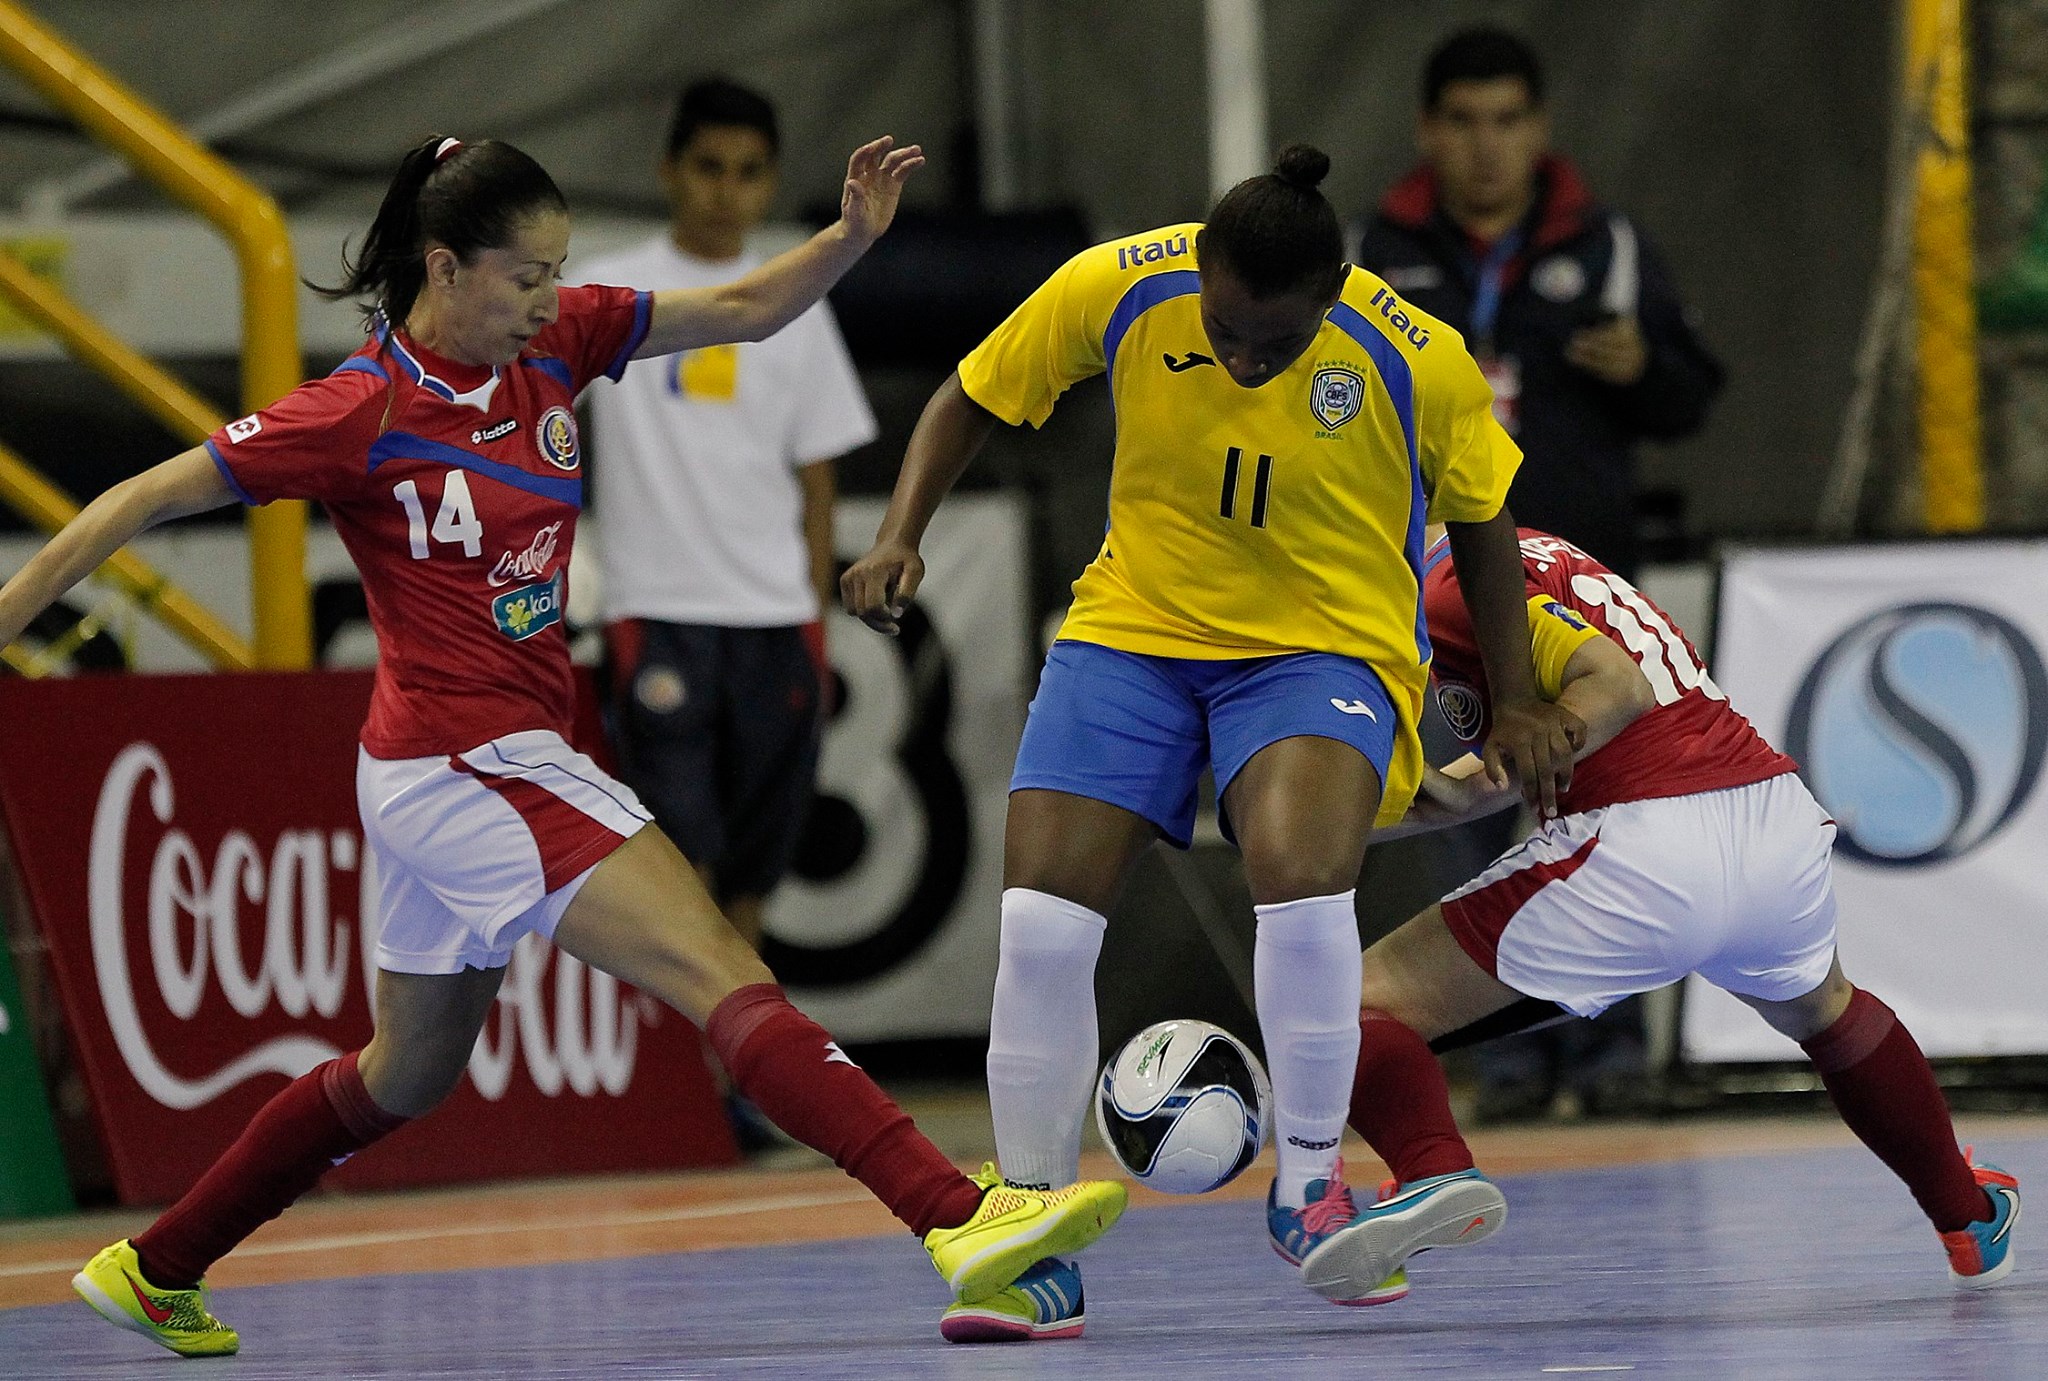 Women World Futsal Tournament, Costa Rica Mundial, futsal mundial 2014, femenino, V Torneio Mundial de Futsal Feminino, FIFA, UEFA, жіночий